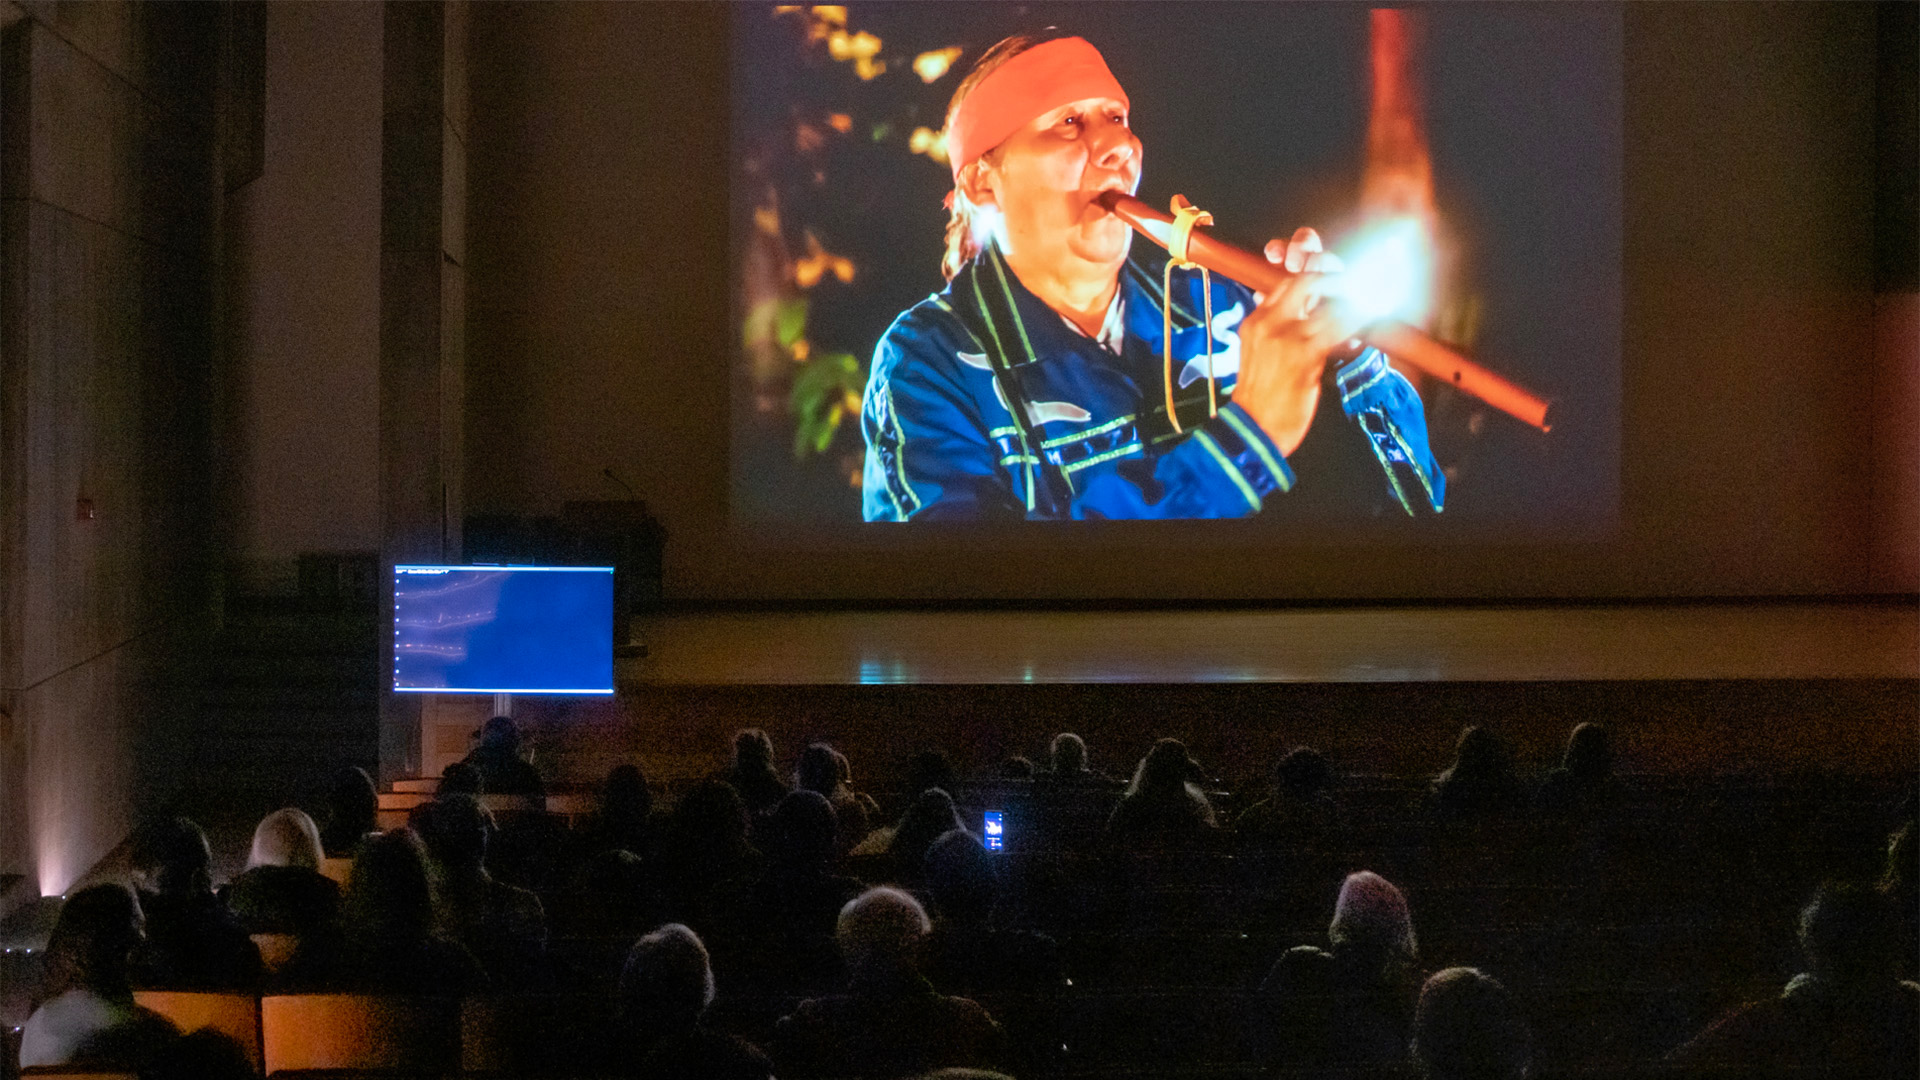 Documentation image of the film "Haudenosaunee Canoe Journey" projected in the Everson Museum's auditorium